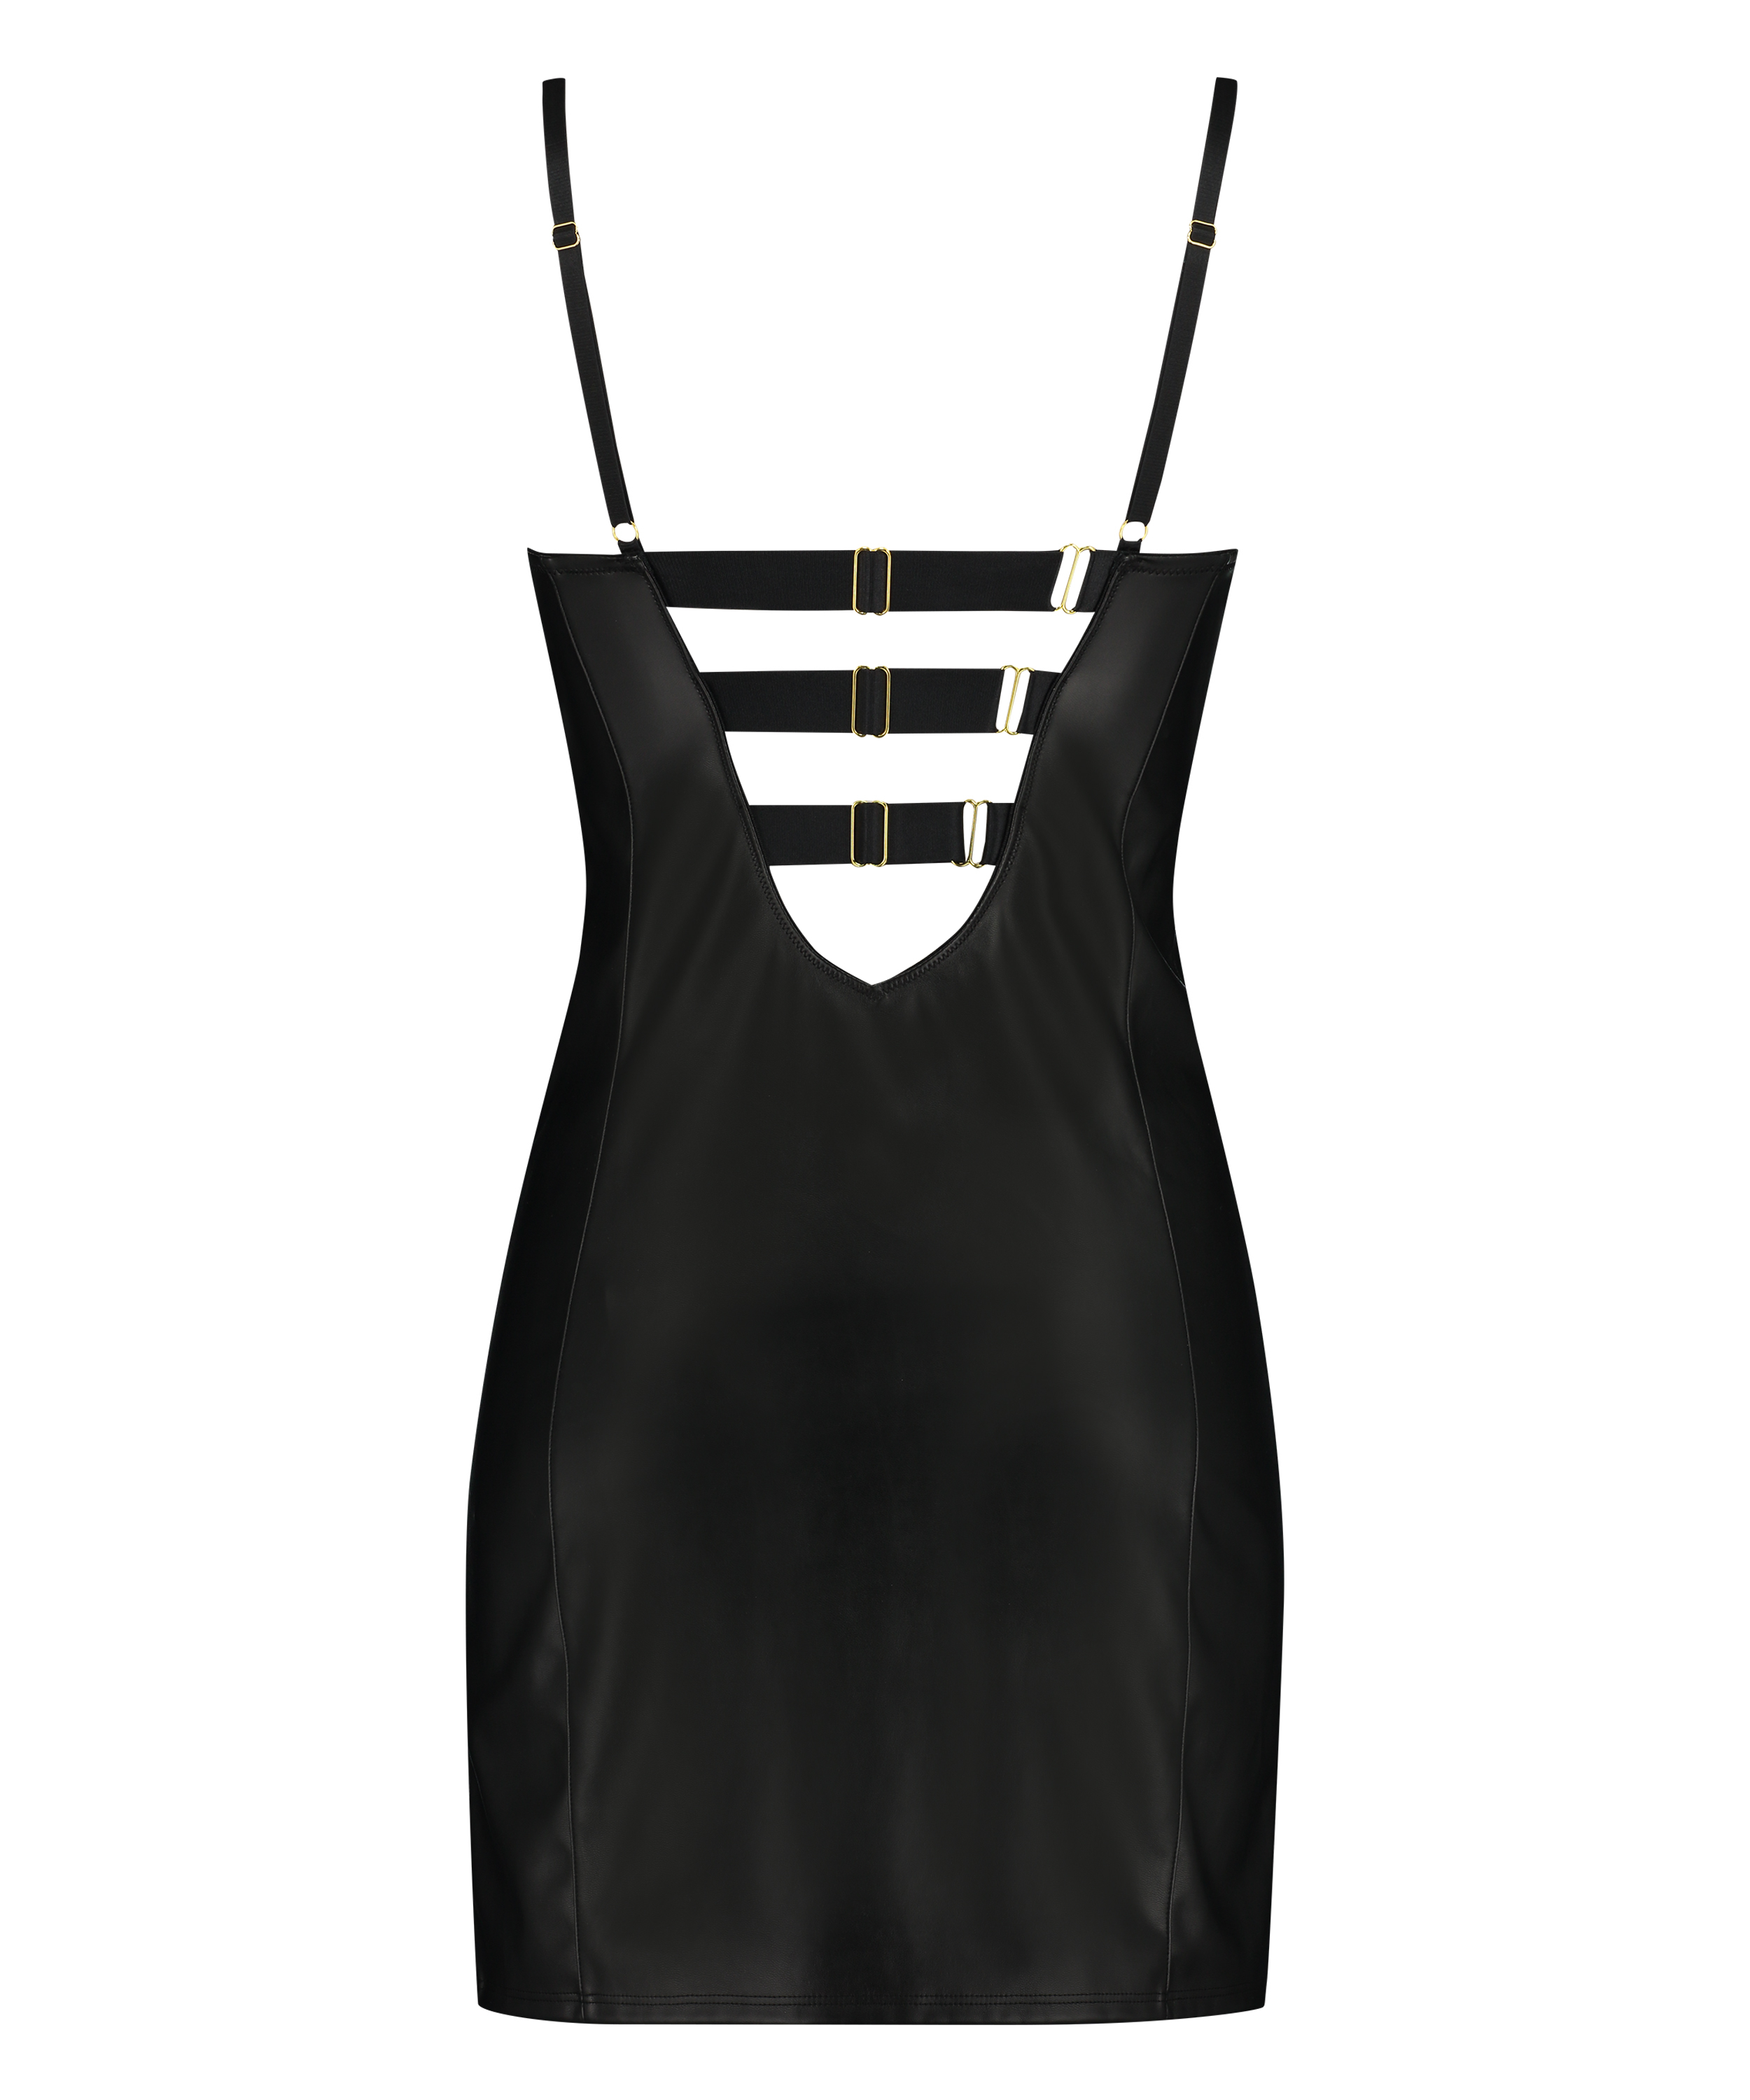 Preformed push-up underwired Slip Dress Talia, Black, main